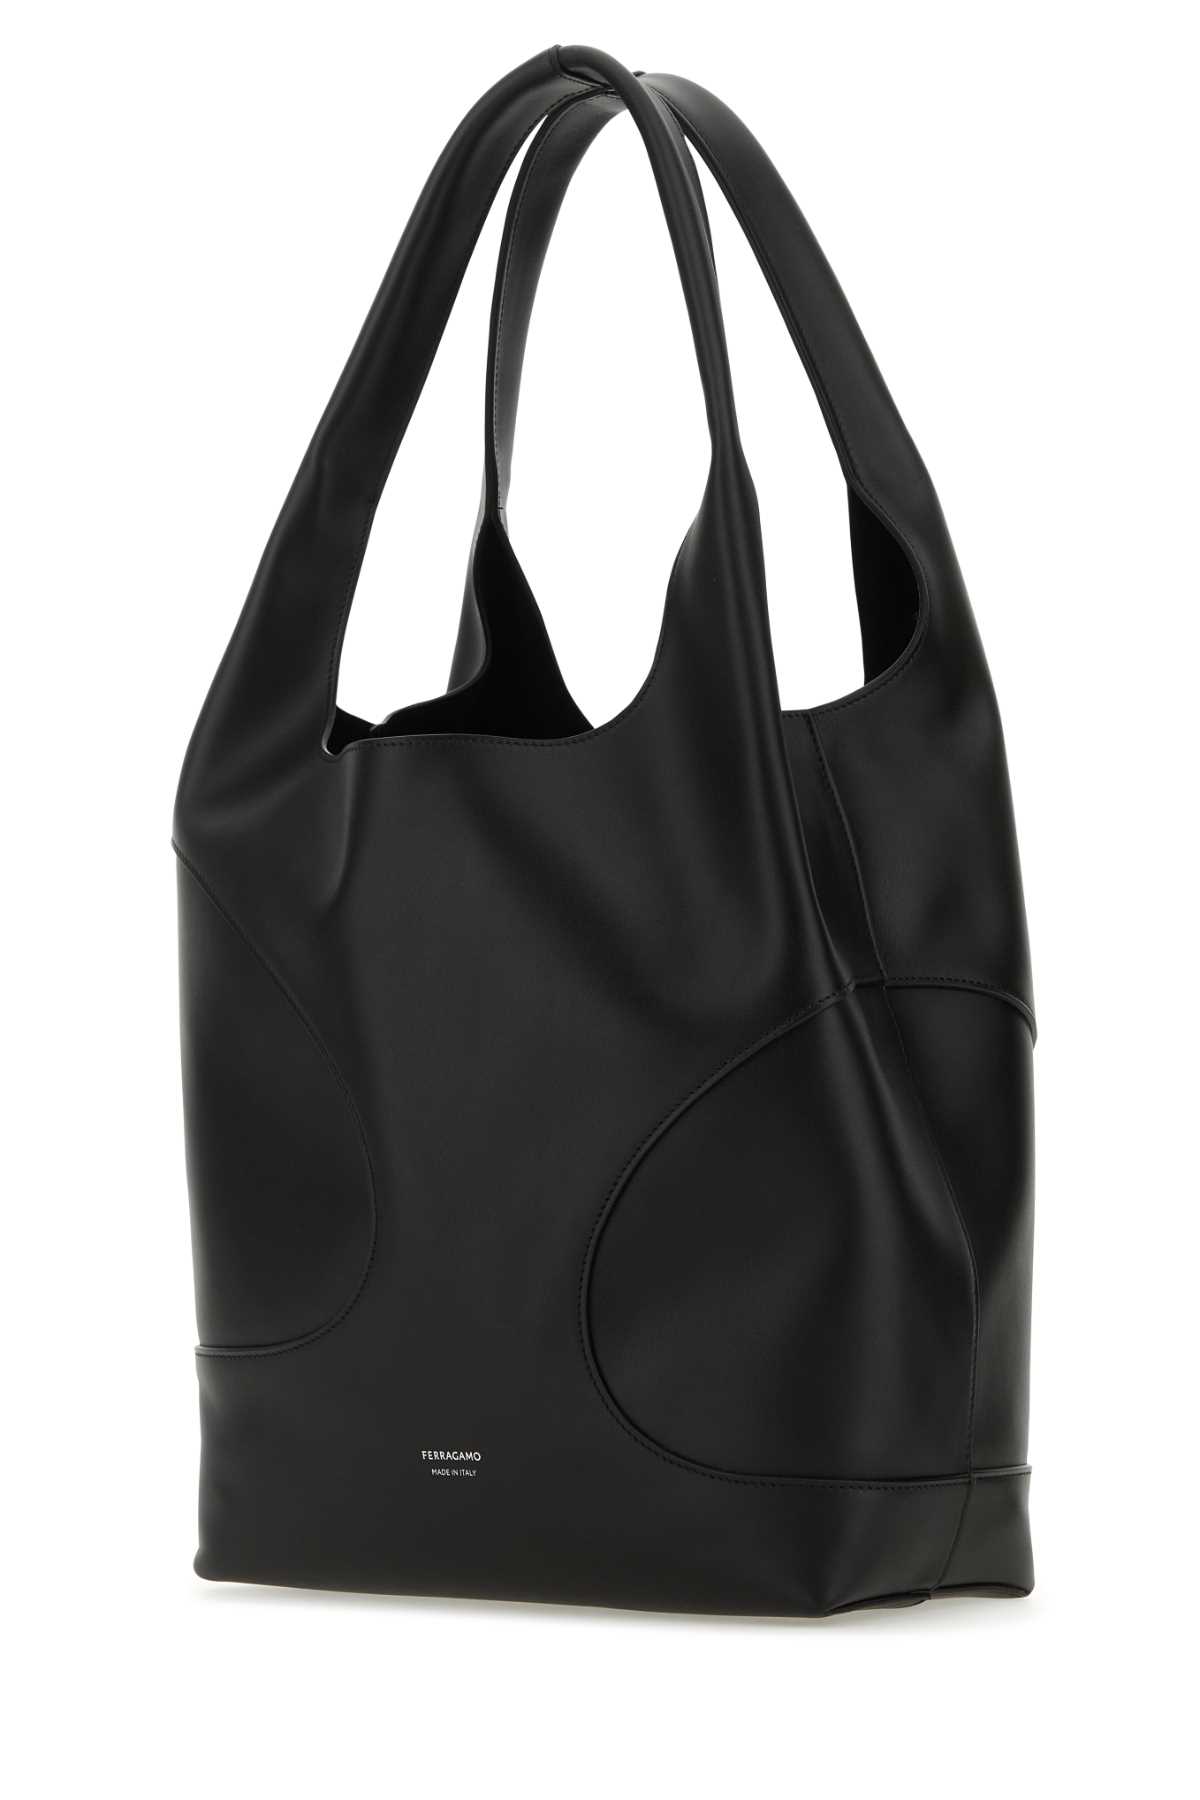 Ferragamo Black Leather Shoulder Bag In Testadimorodarkbarolodarkbarolo